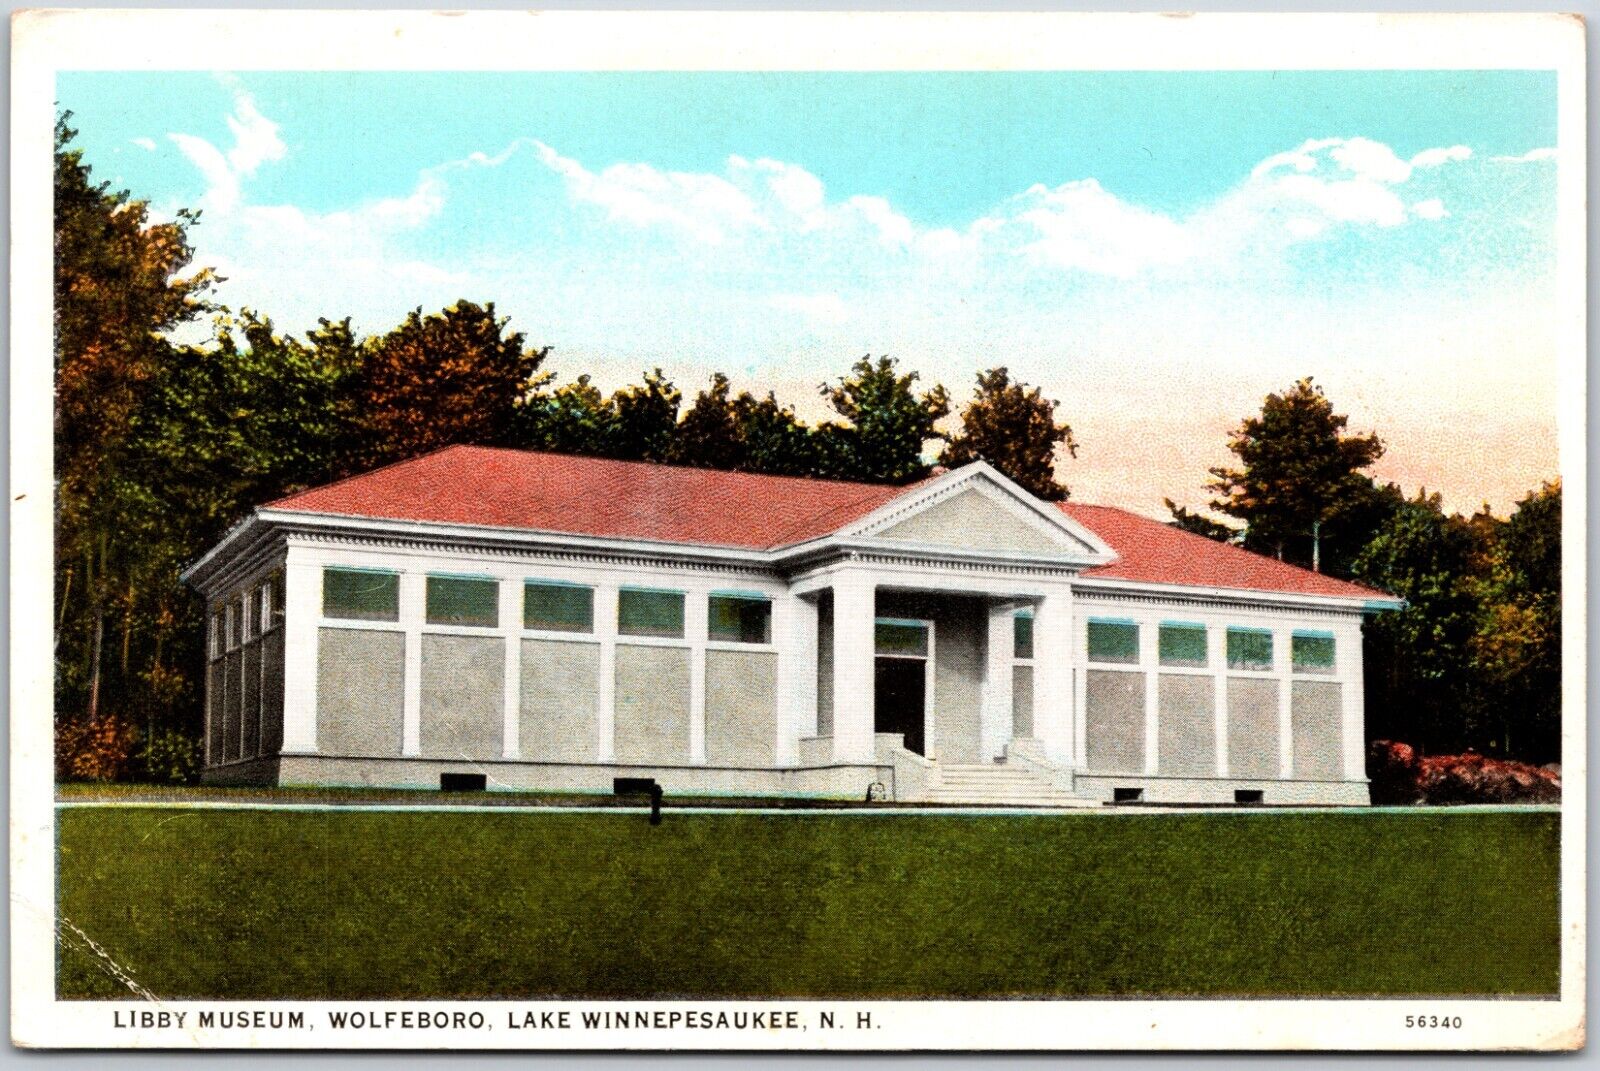 Libby Museum, Wolfeboro, Lake Winnepesaukee, New Hampshire - Postcard